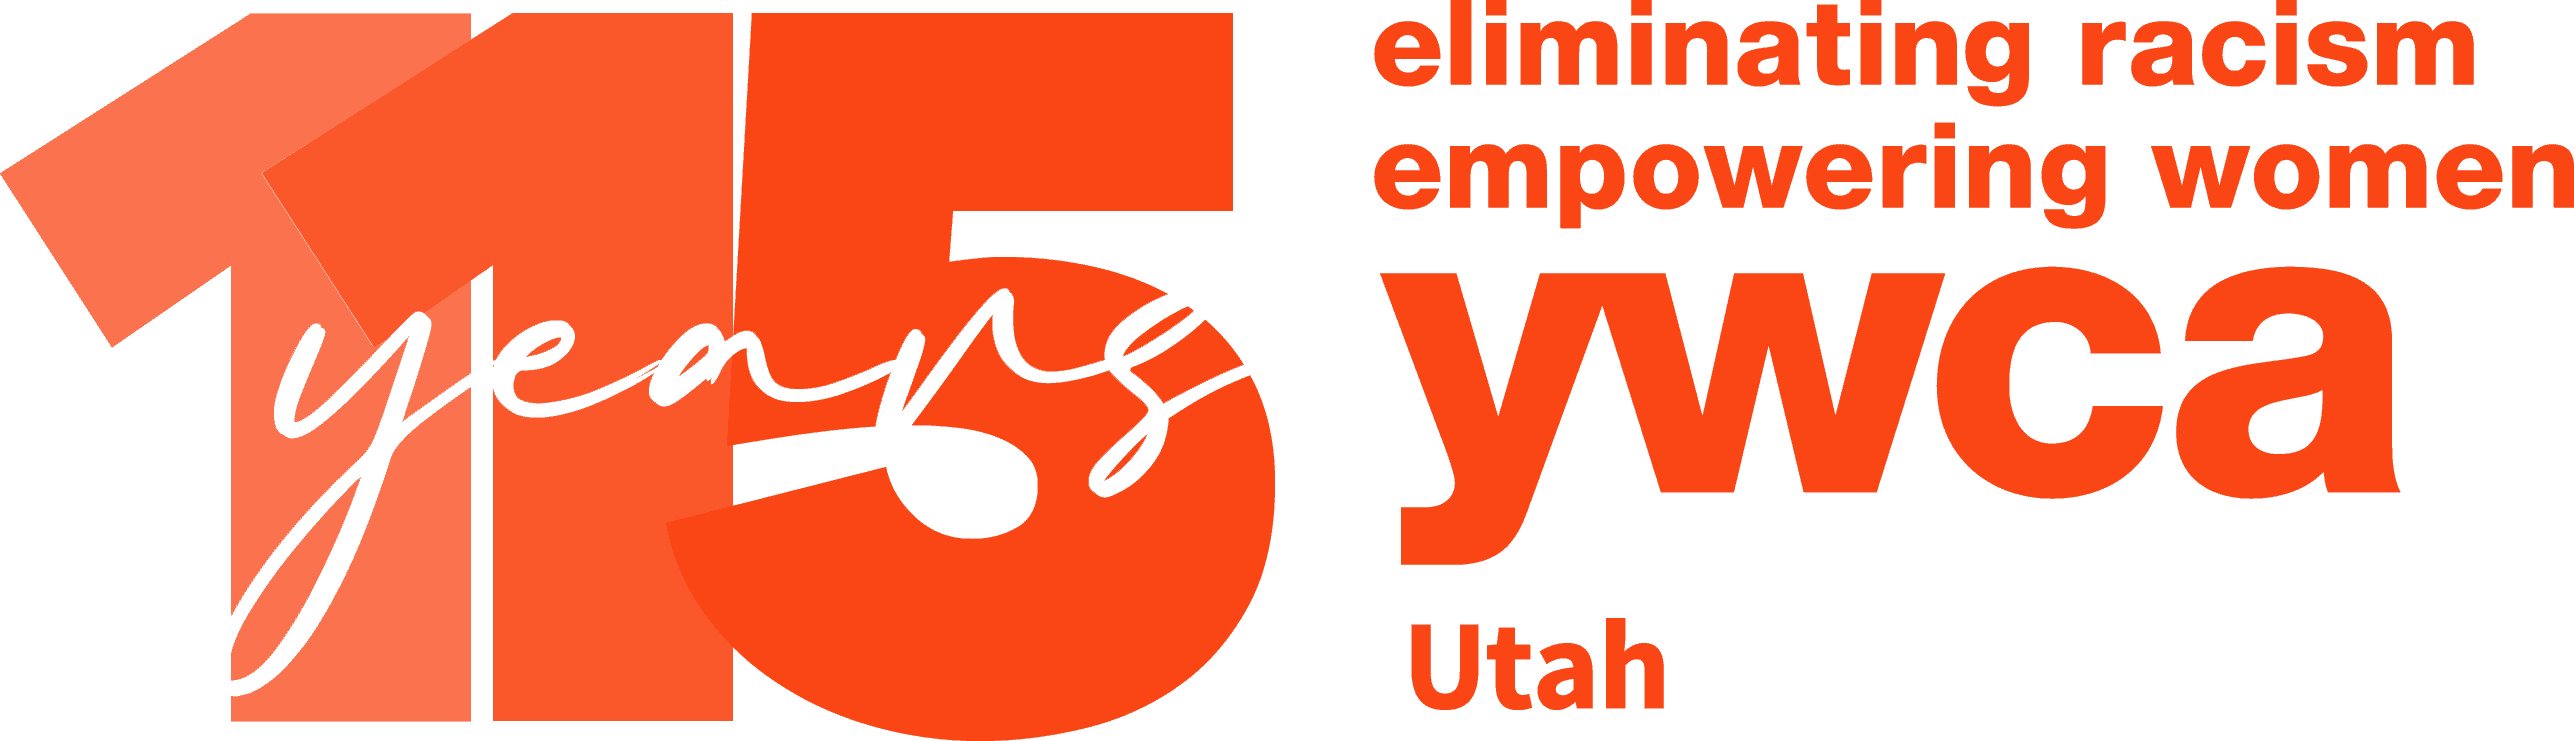 South Salt Lake City Logo